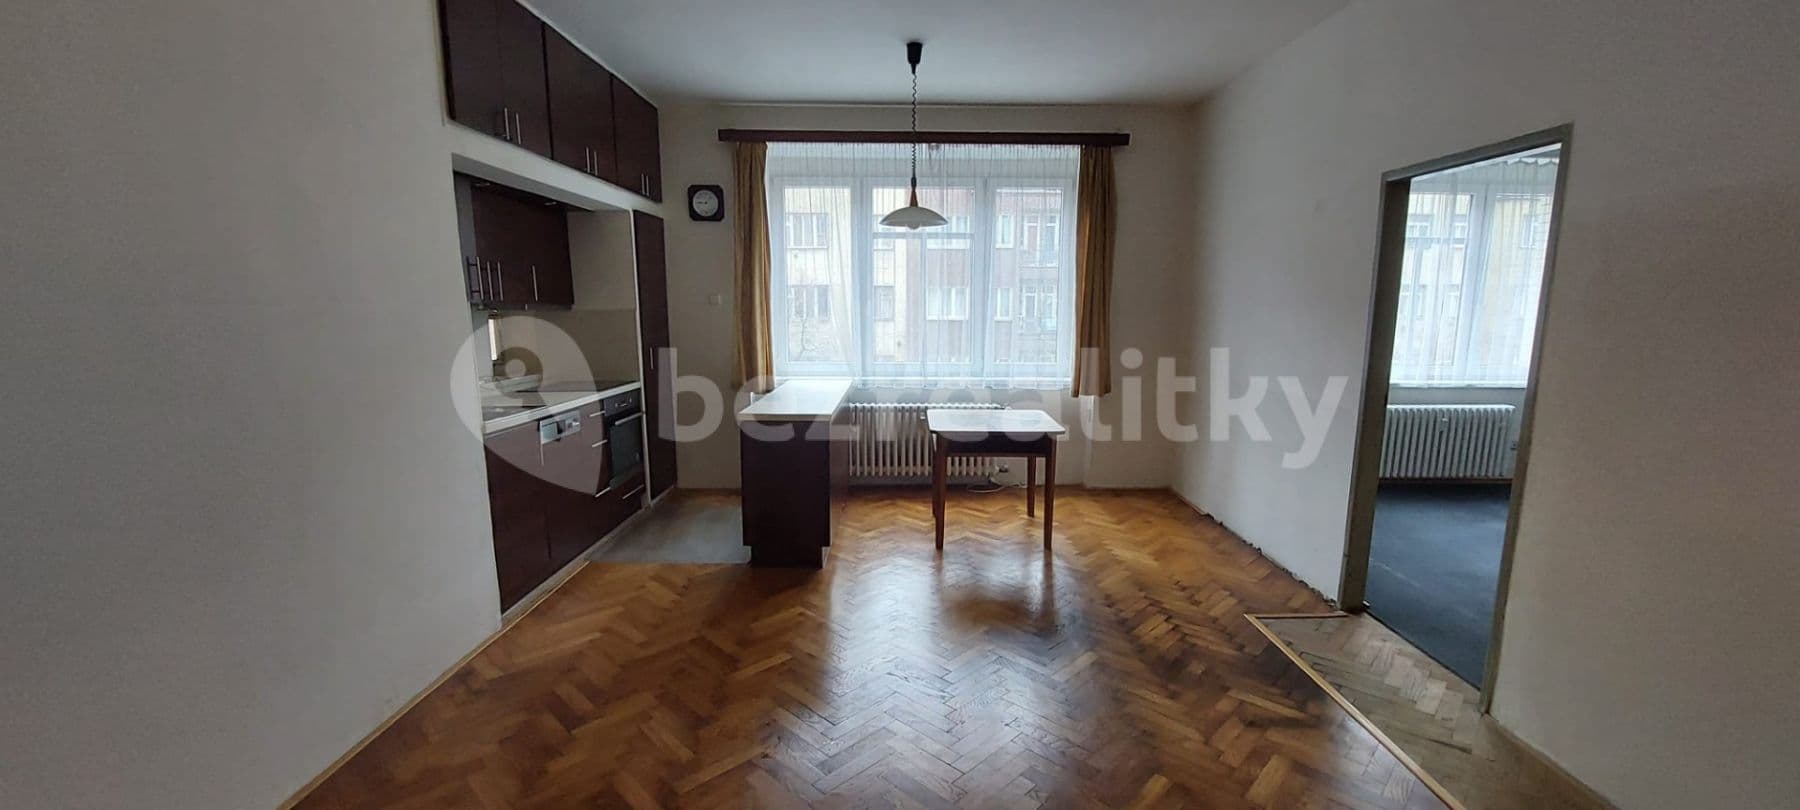 1 bedroom with open-plan kitchen flat to rent, 53 m², Vršovická, Prague, Prague